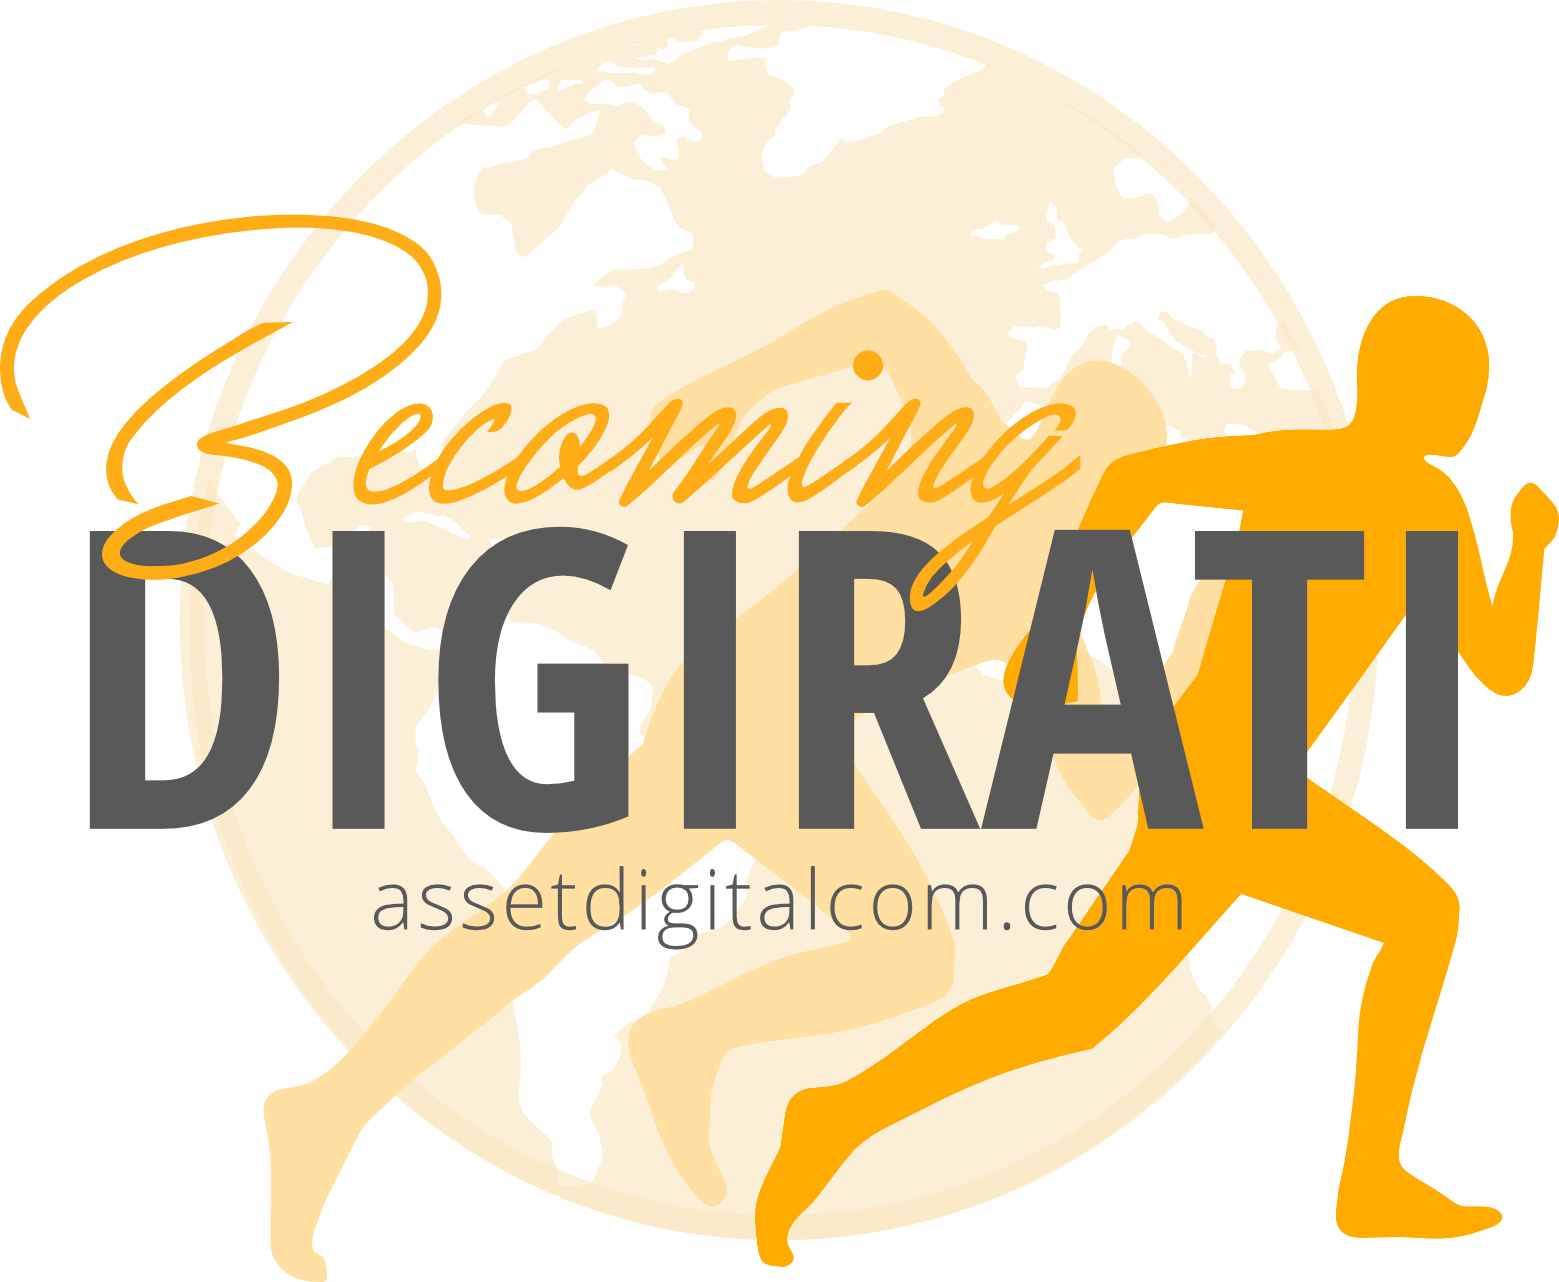 Asset Digital Communications